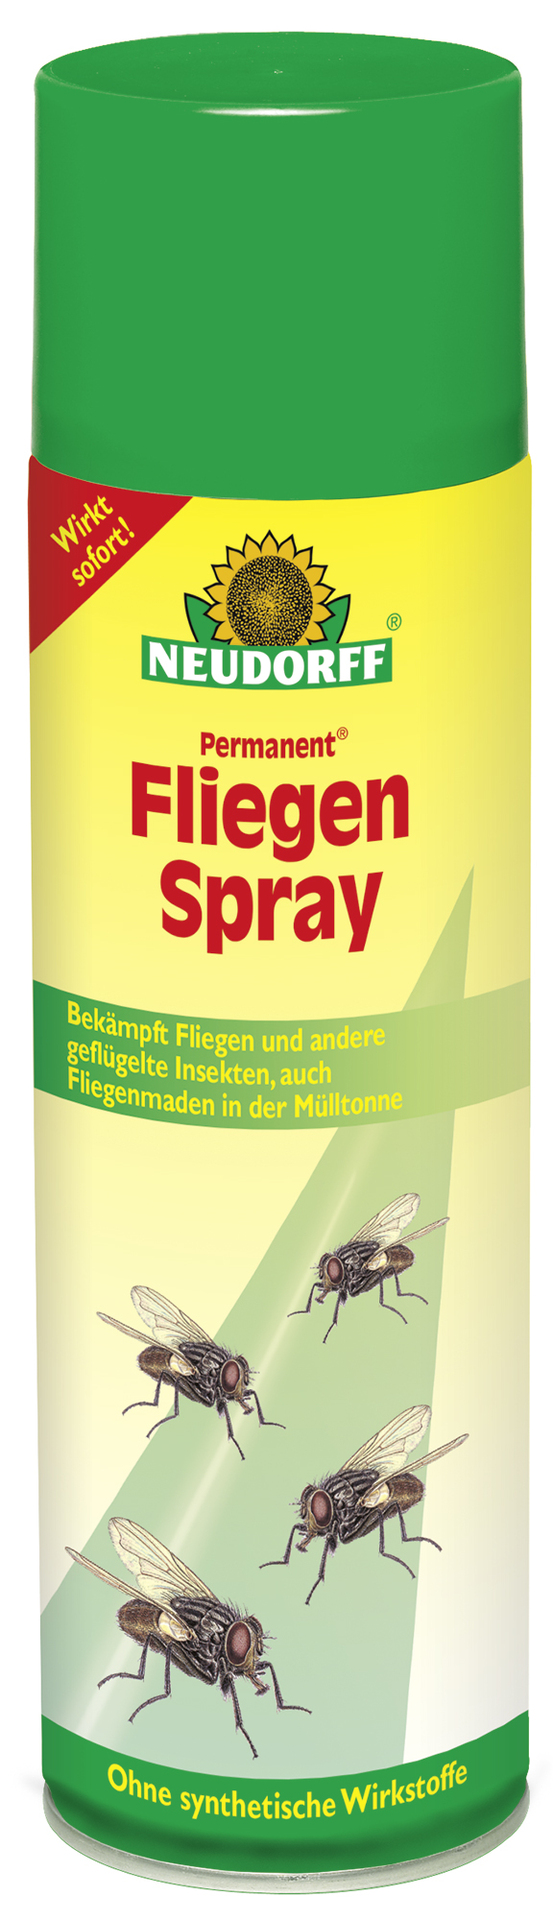 Permanent Fliegenspray